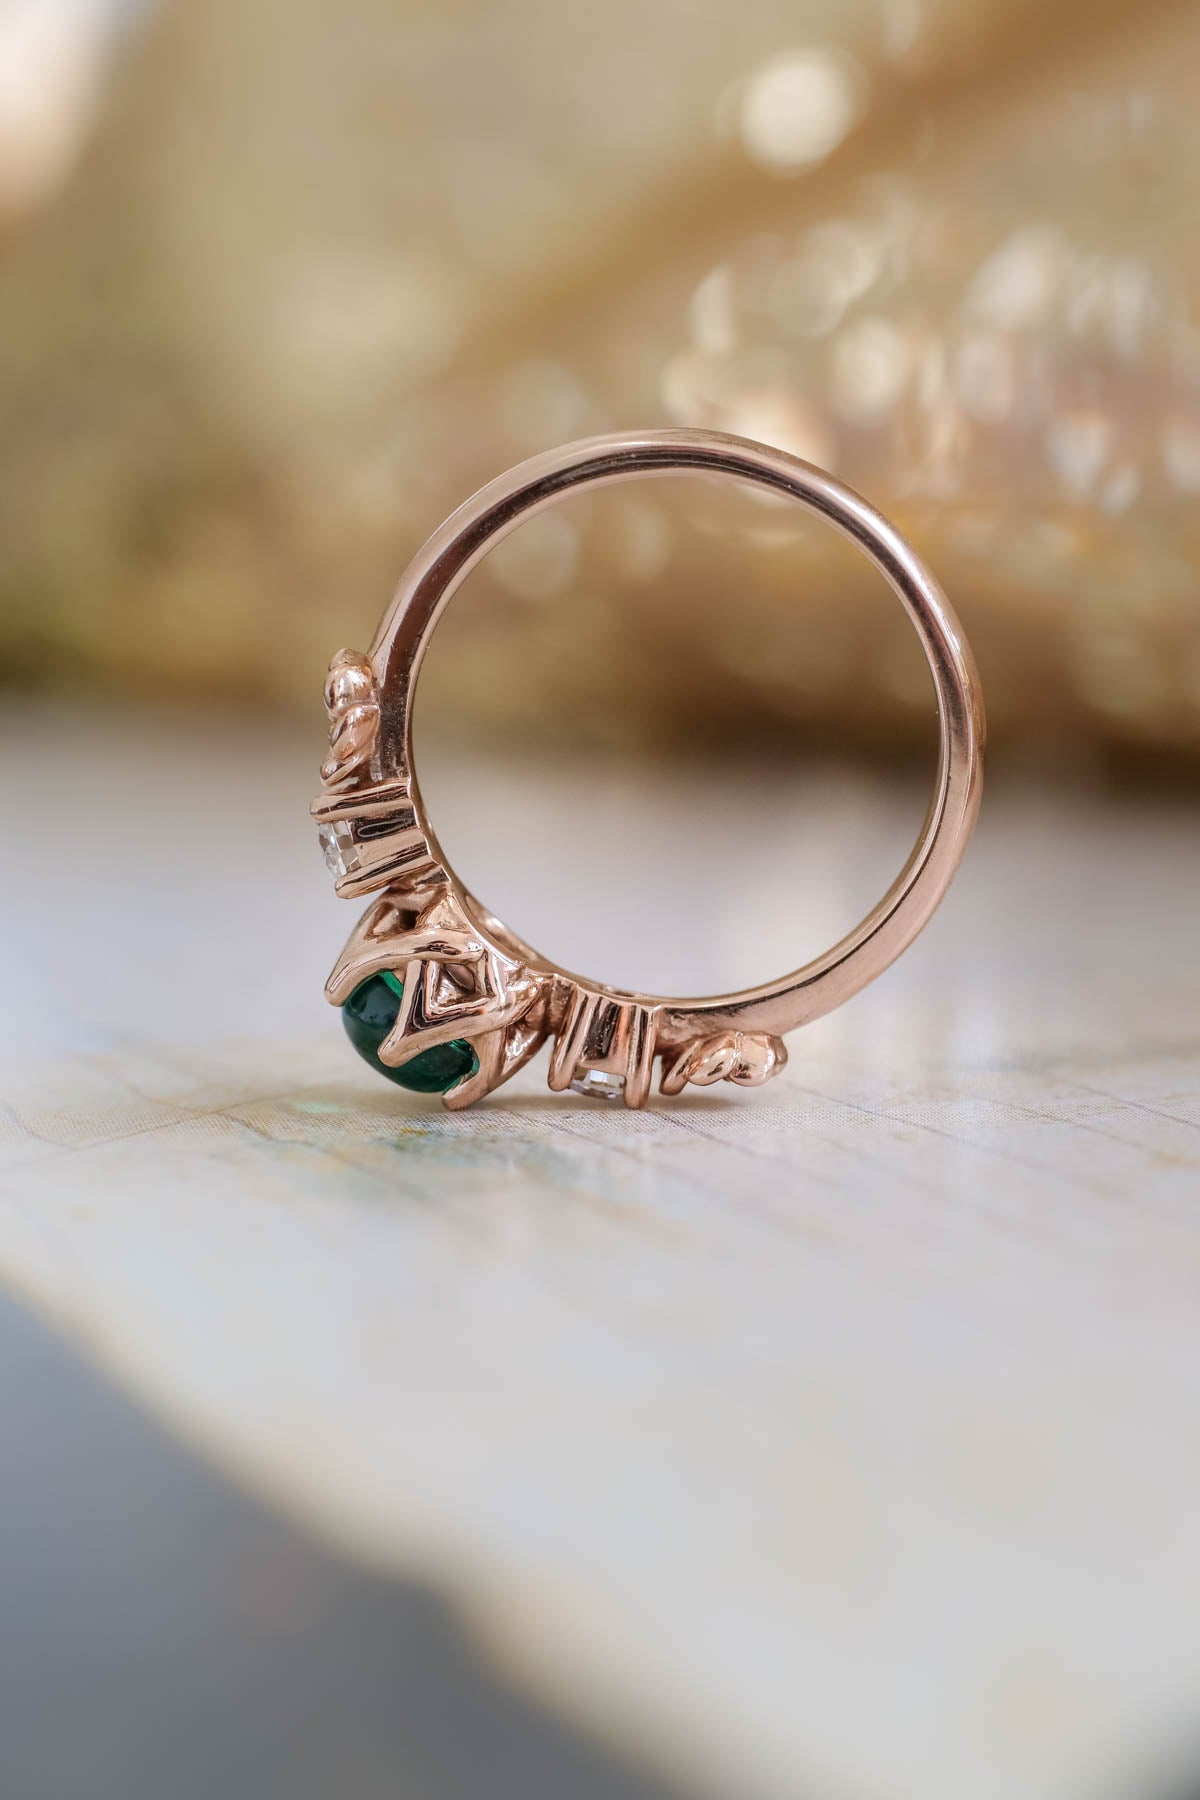 Emerald engagement ring, green engagement rings / Fiorella - Eden Garden Jewelry™